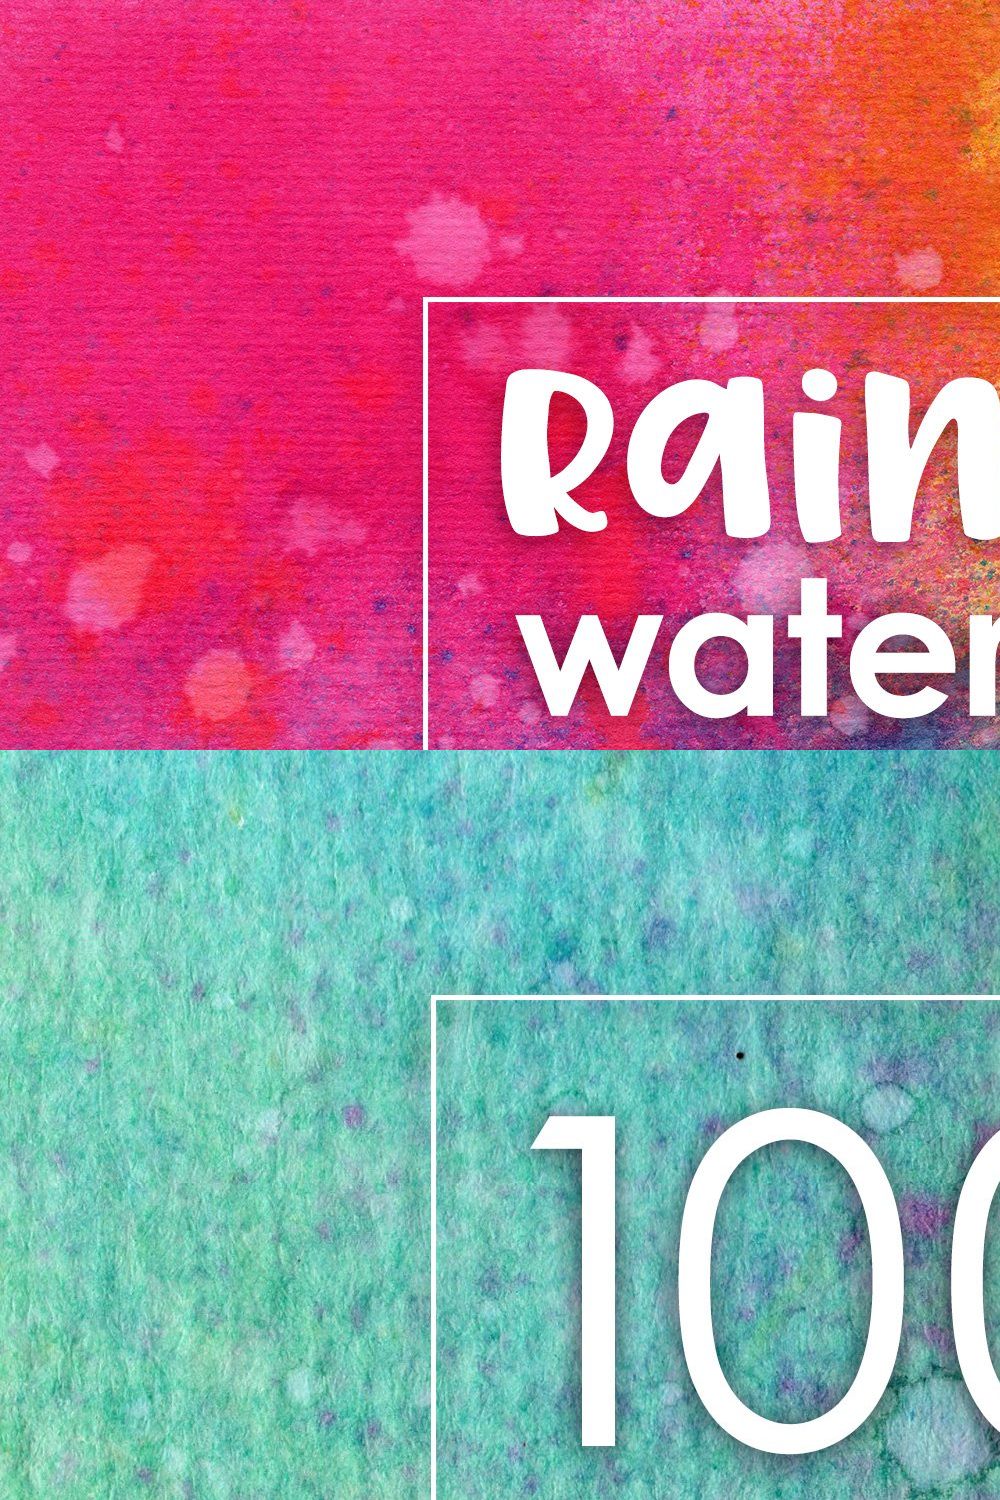 Rainbow Watercolor Splatter Textures pinterest preview image.